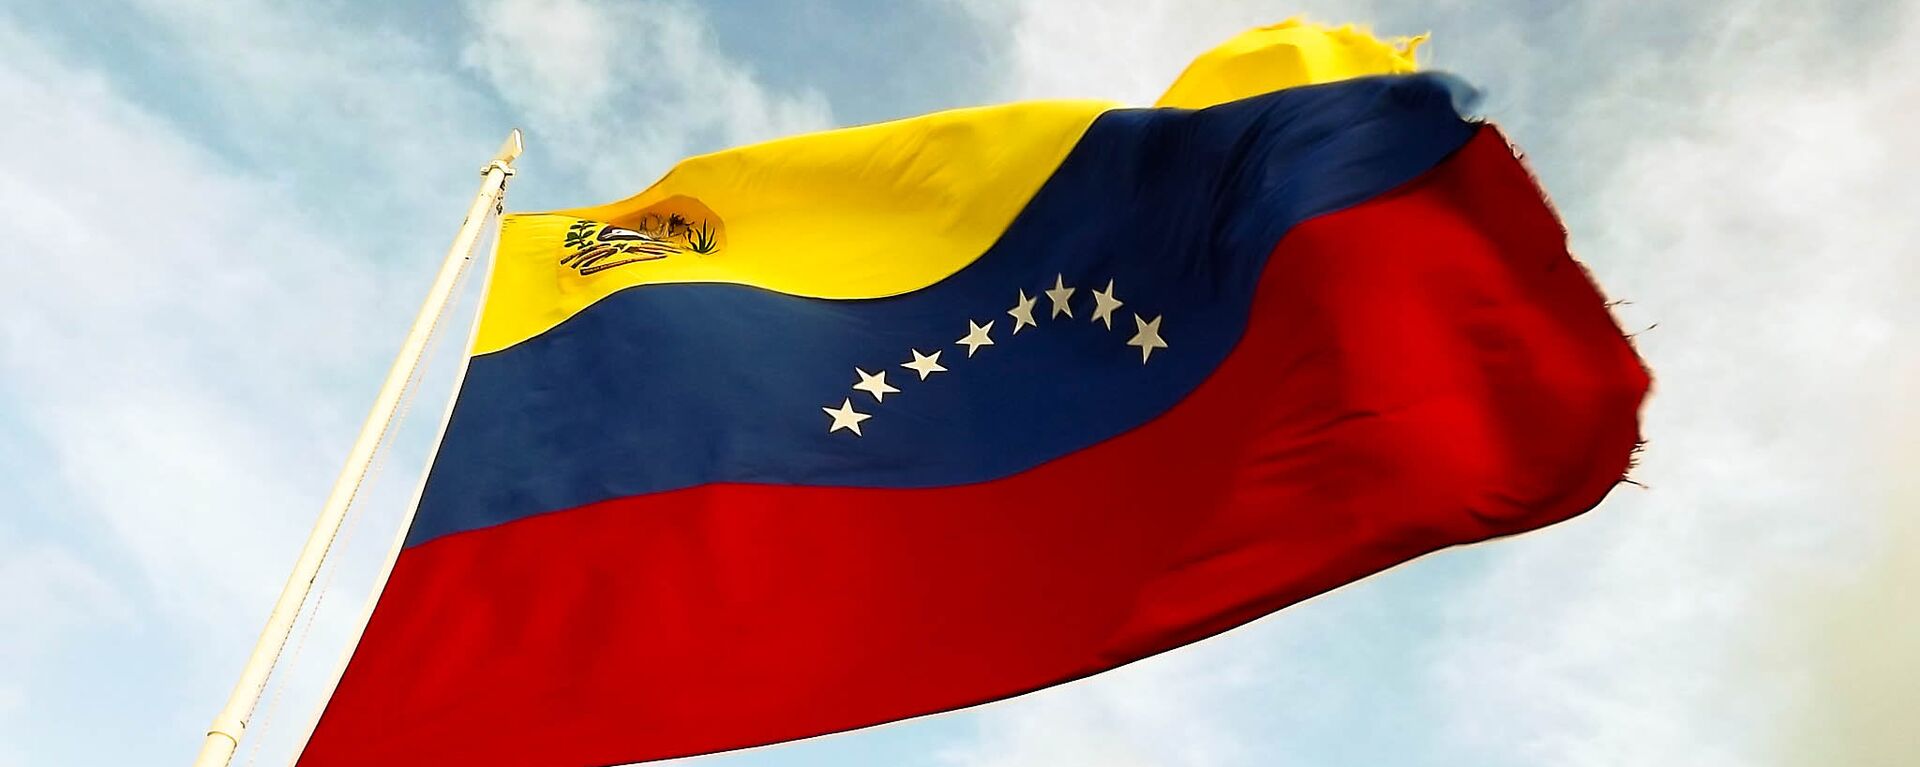 Bandera de Venezuela - Sputnik Mundo, 1920, 25.03.2021